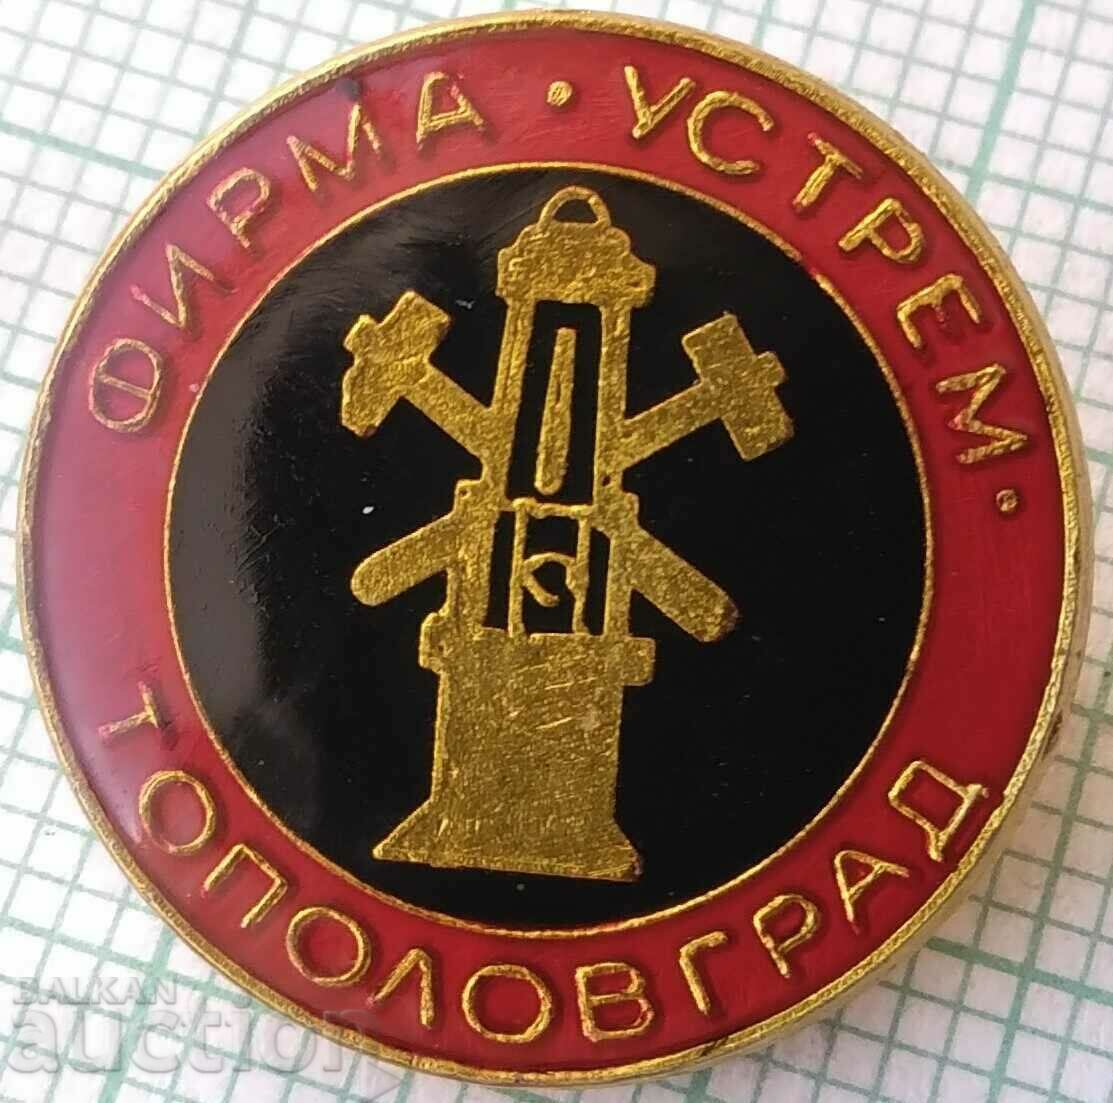 15623 Badge - Ustrem Topolovgrad company